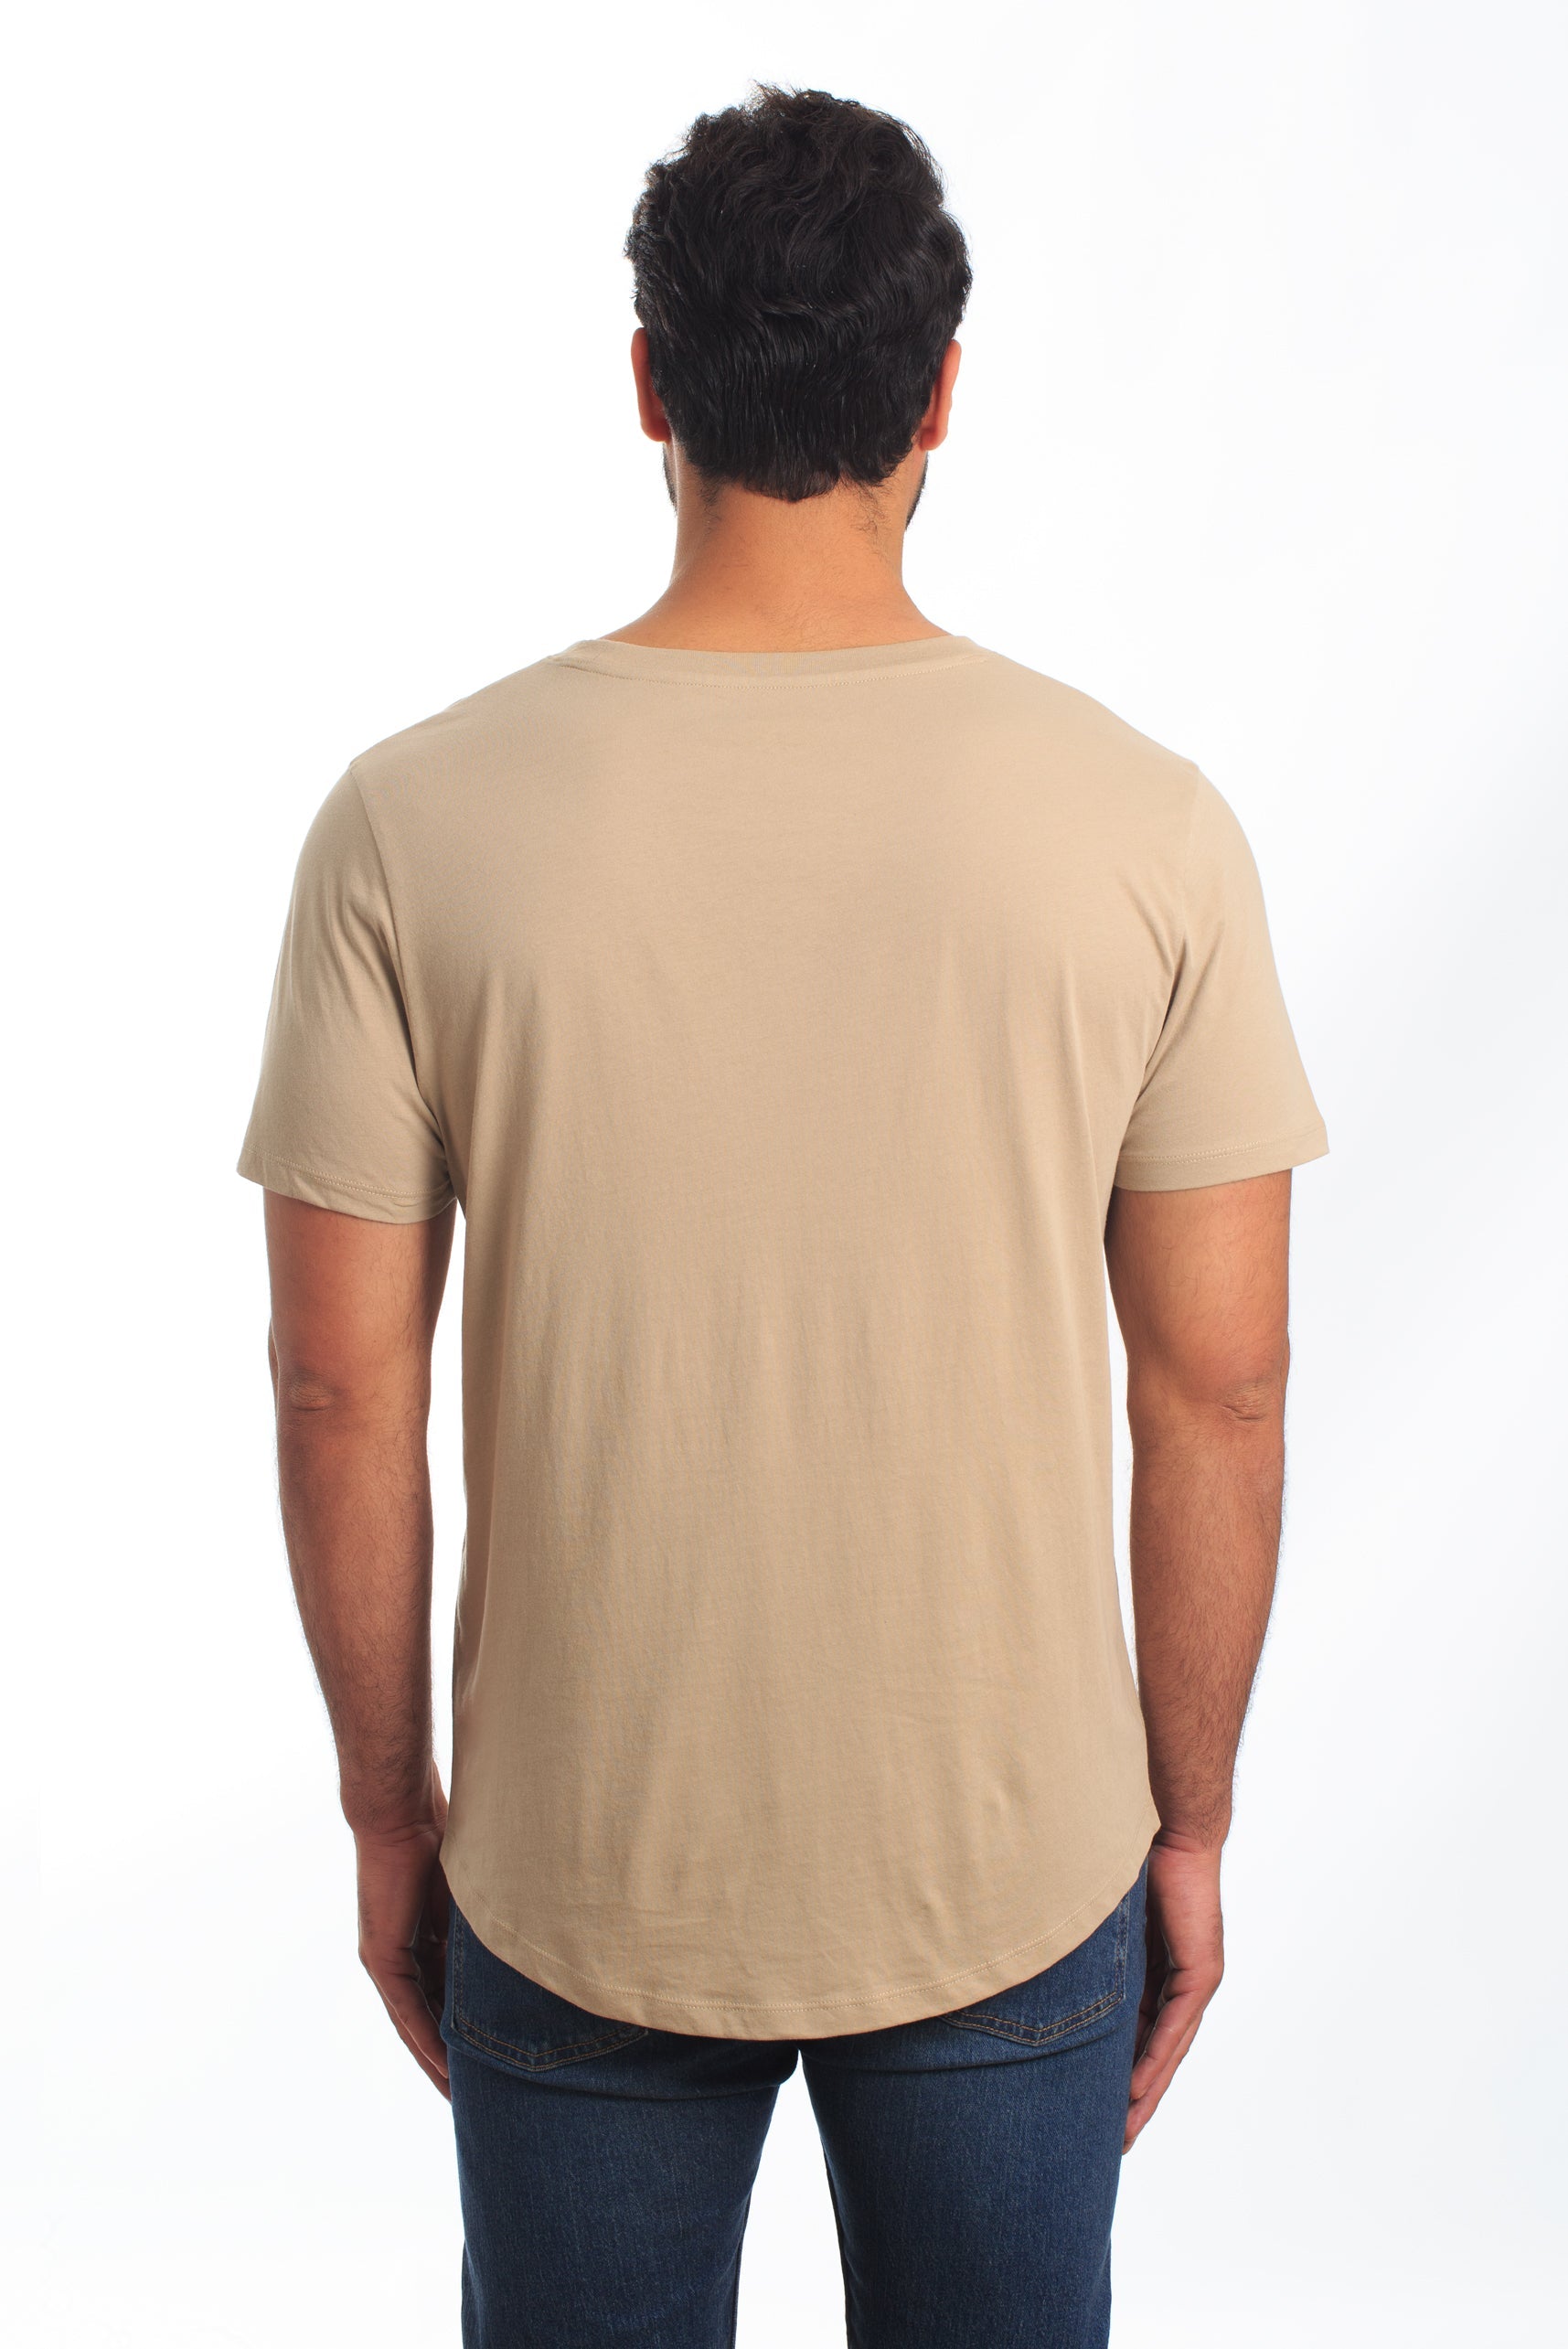 Sand T-Shirt TEE-123 Back